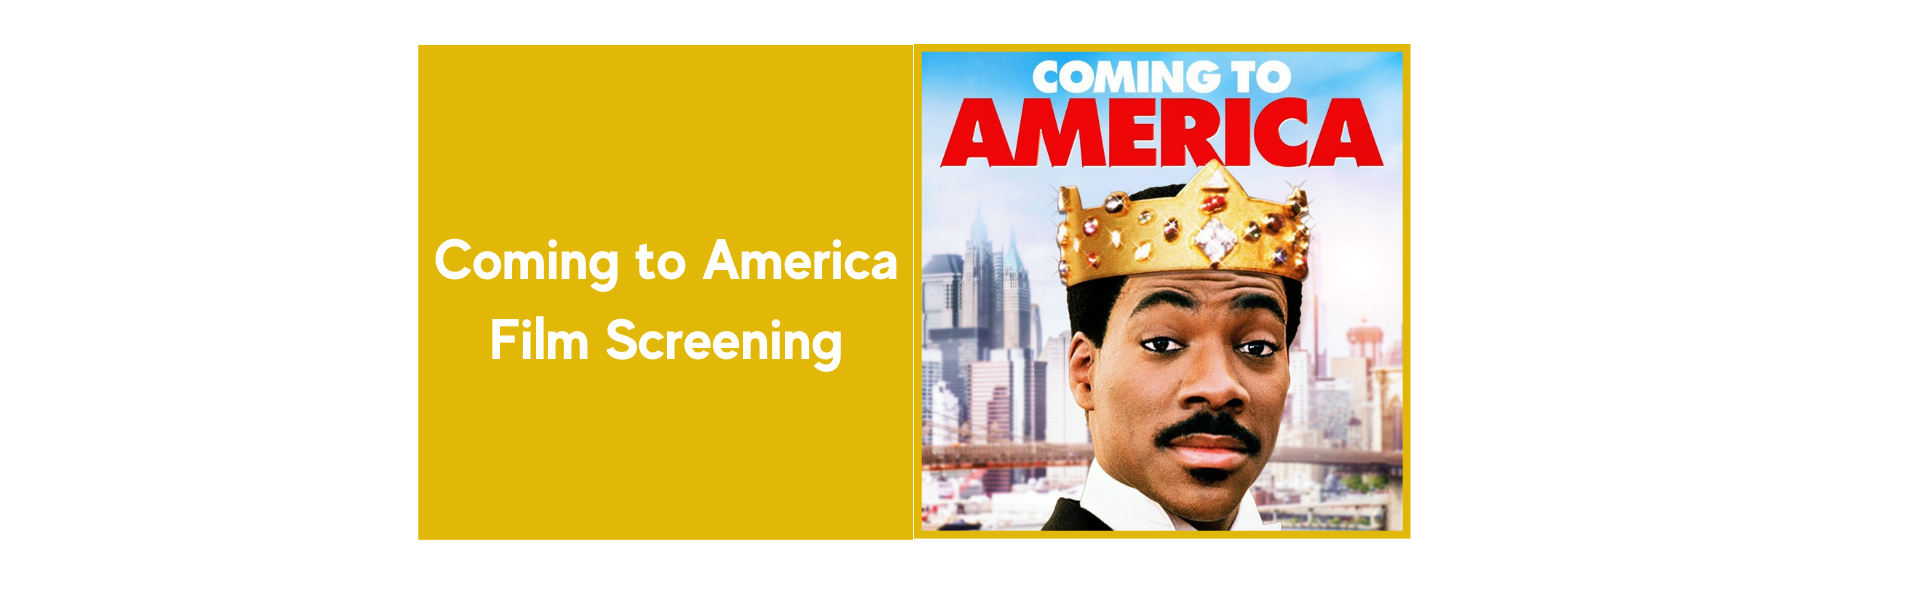 Coming-to-America-Film-Screening.png